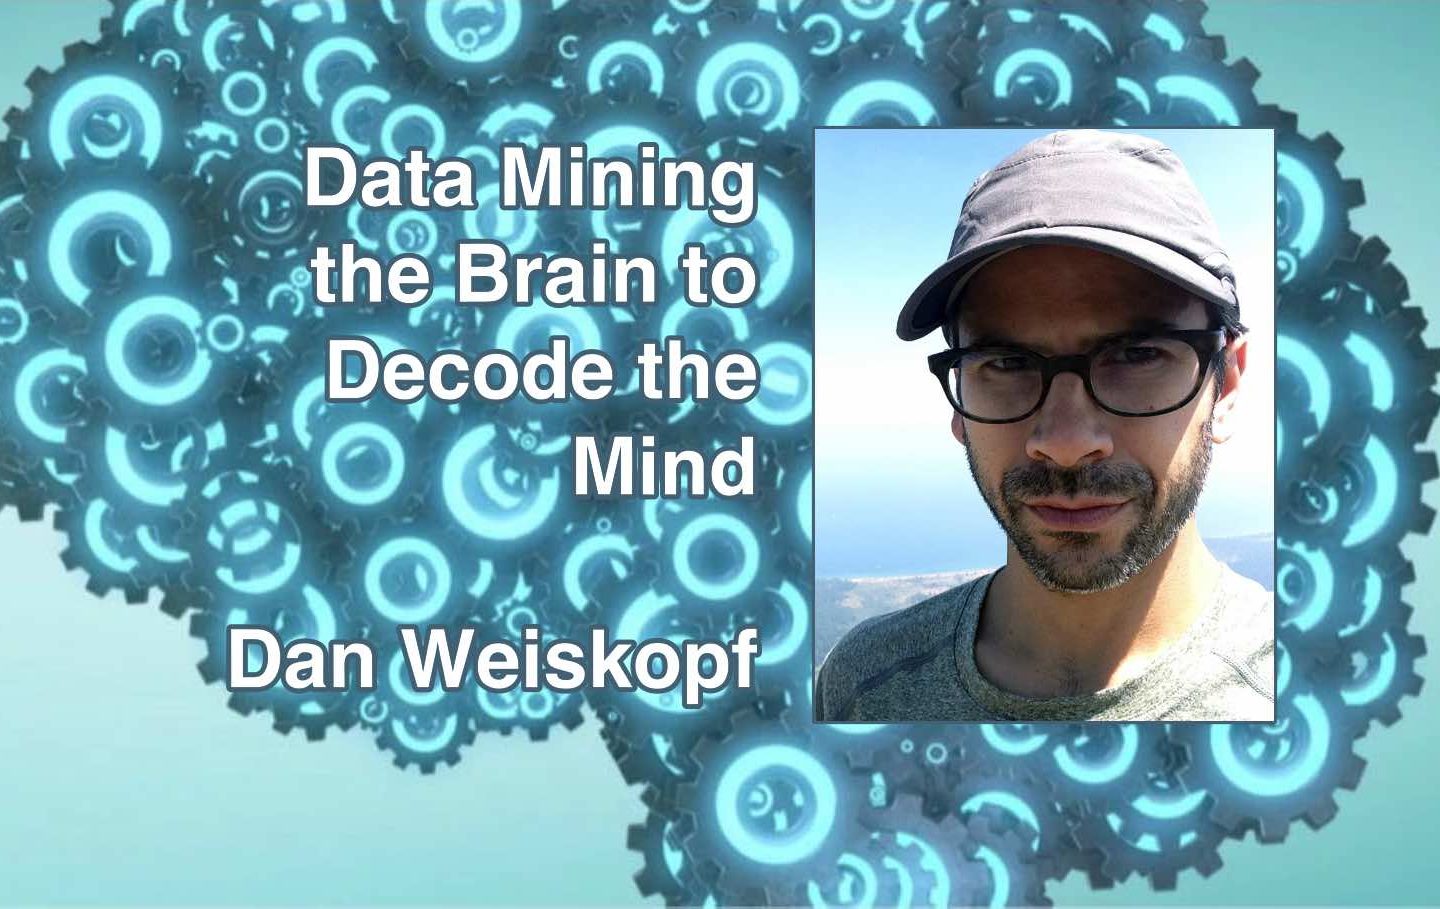 Dan Weiskopf on MVPA for Decoding the Mind